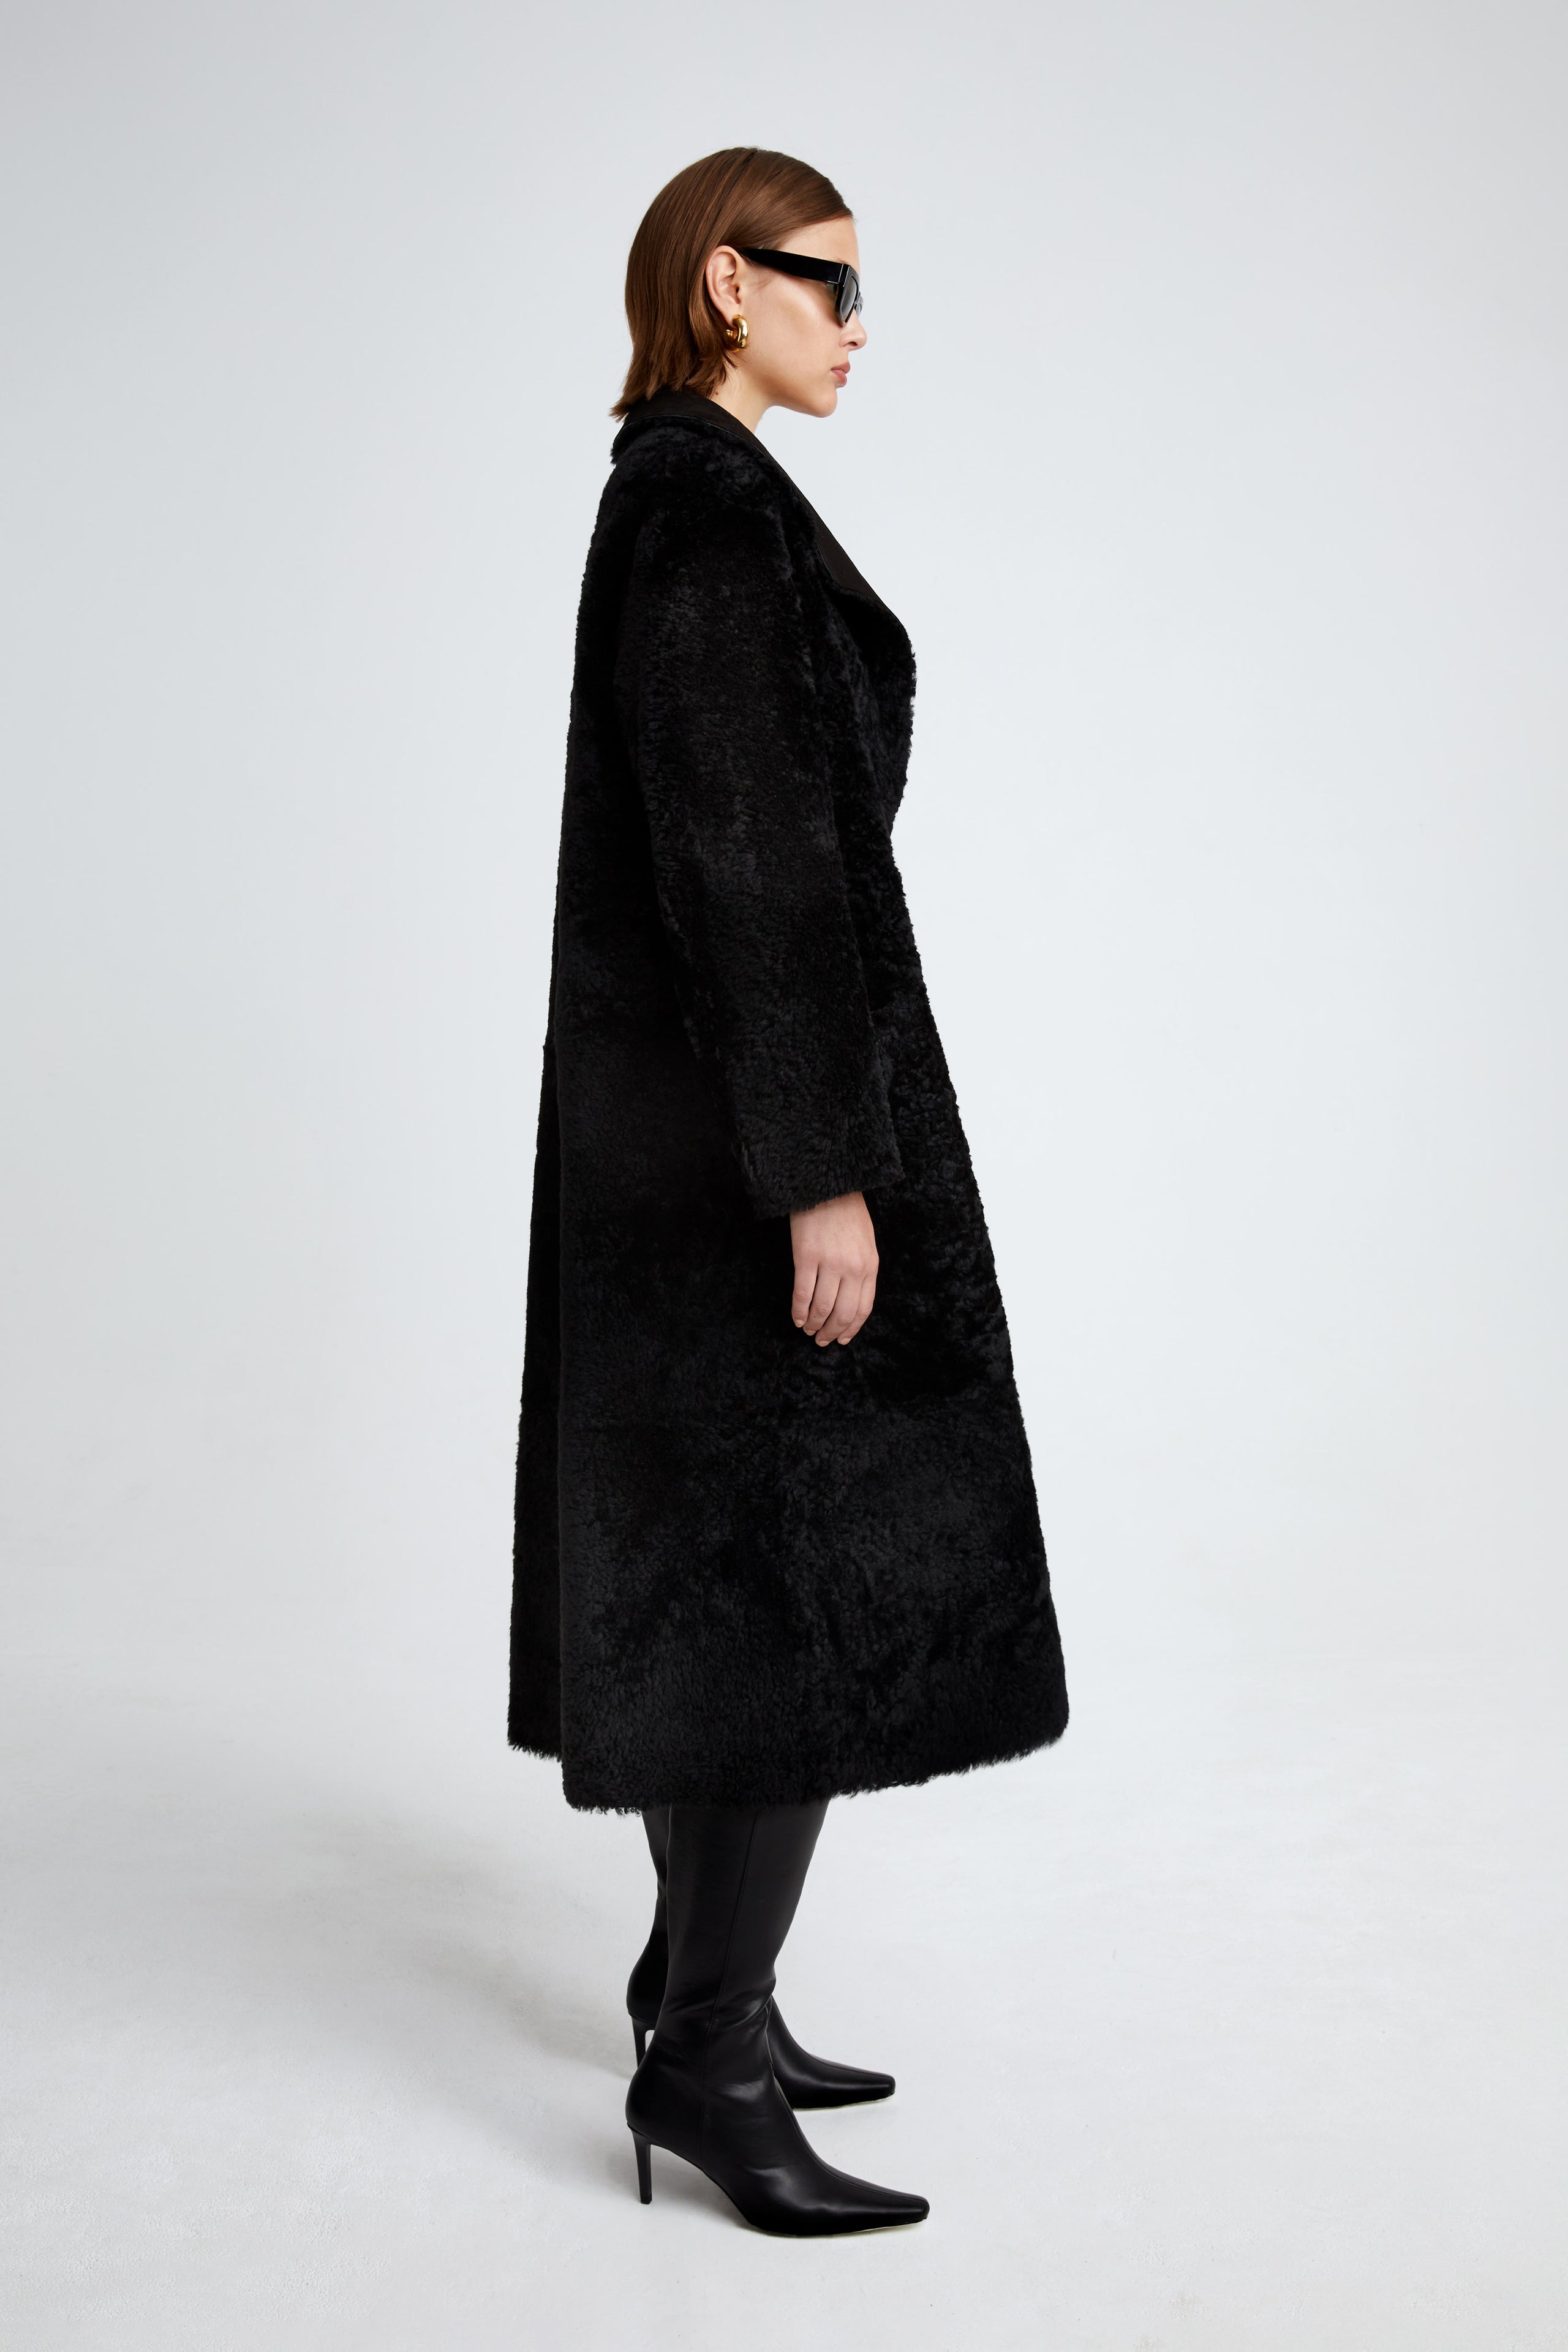 Model is wearing the Birthday Coat Black Draped Shearling Coat Side